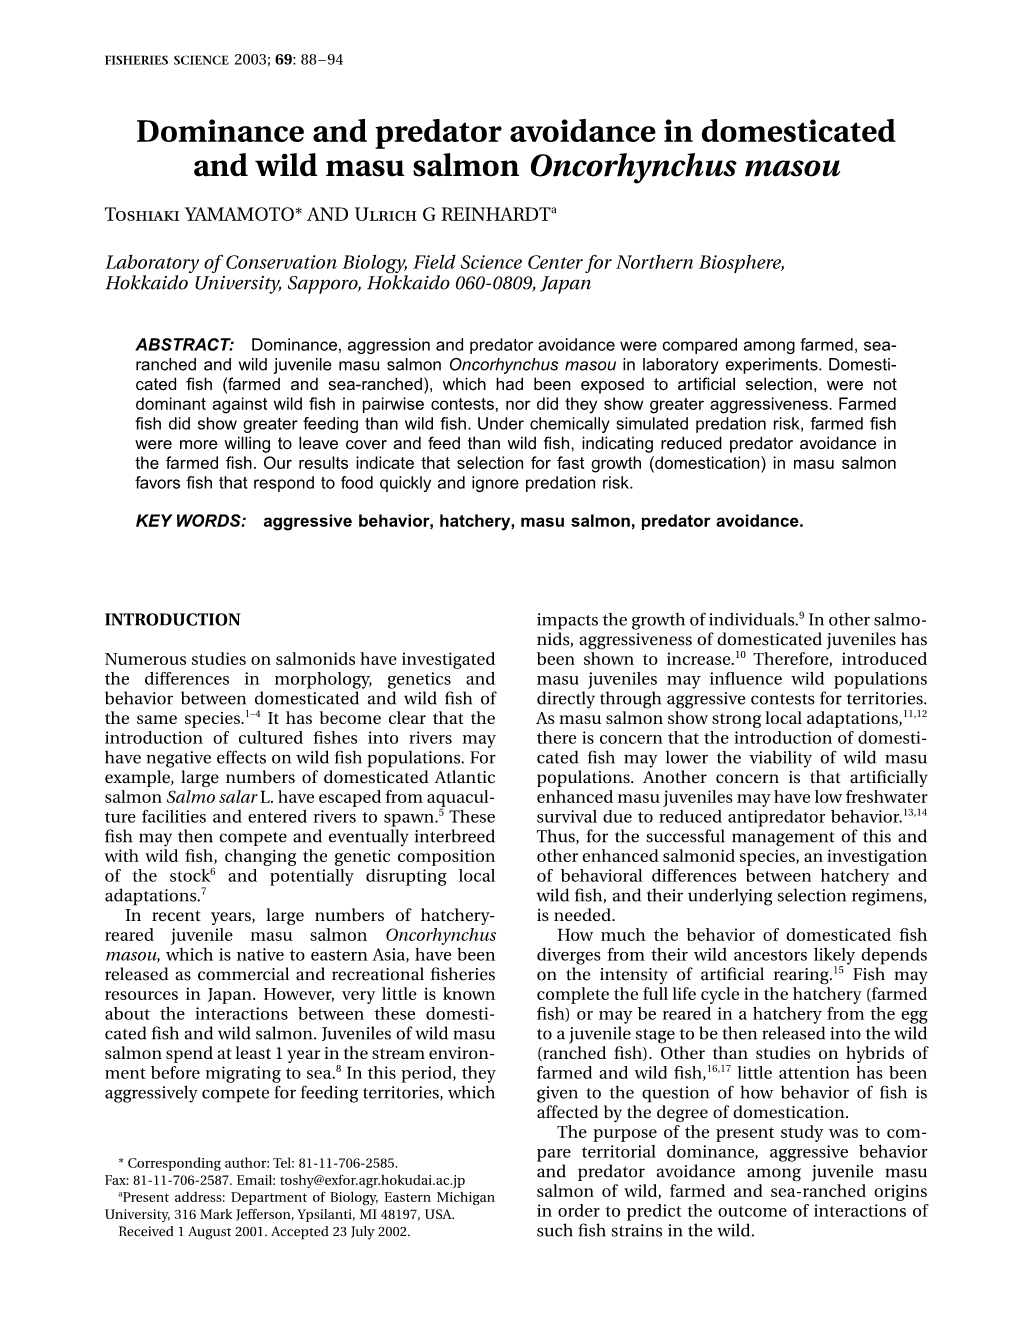 Dominance and Predator Avoidance in Domesticated and Wild Masu Salmon Oncorhynchus Masou